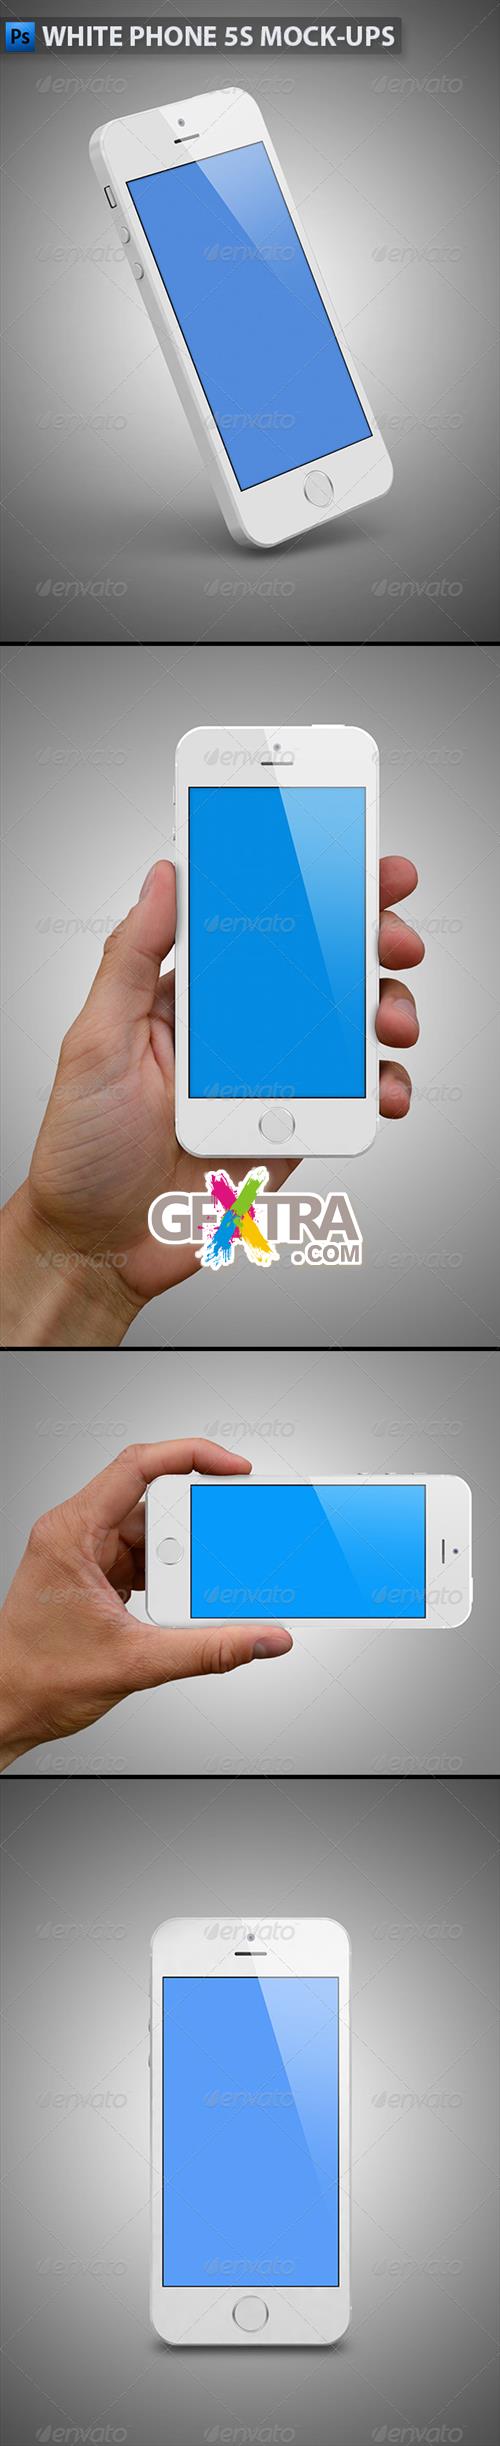 GraphicRiver - White Phone 5s Mock-Ups